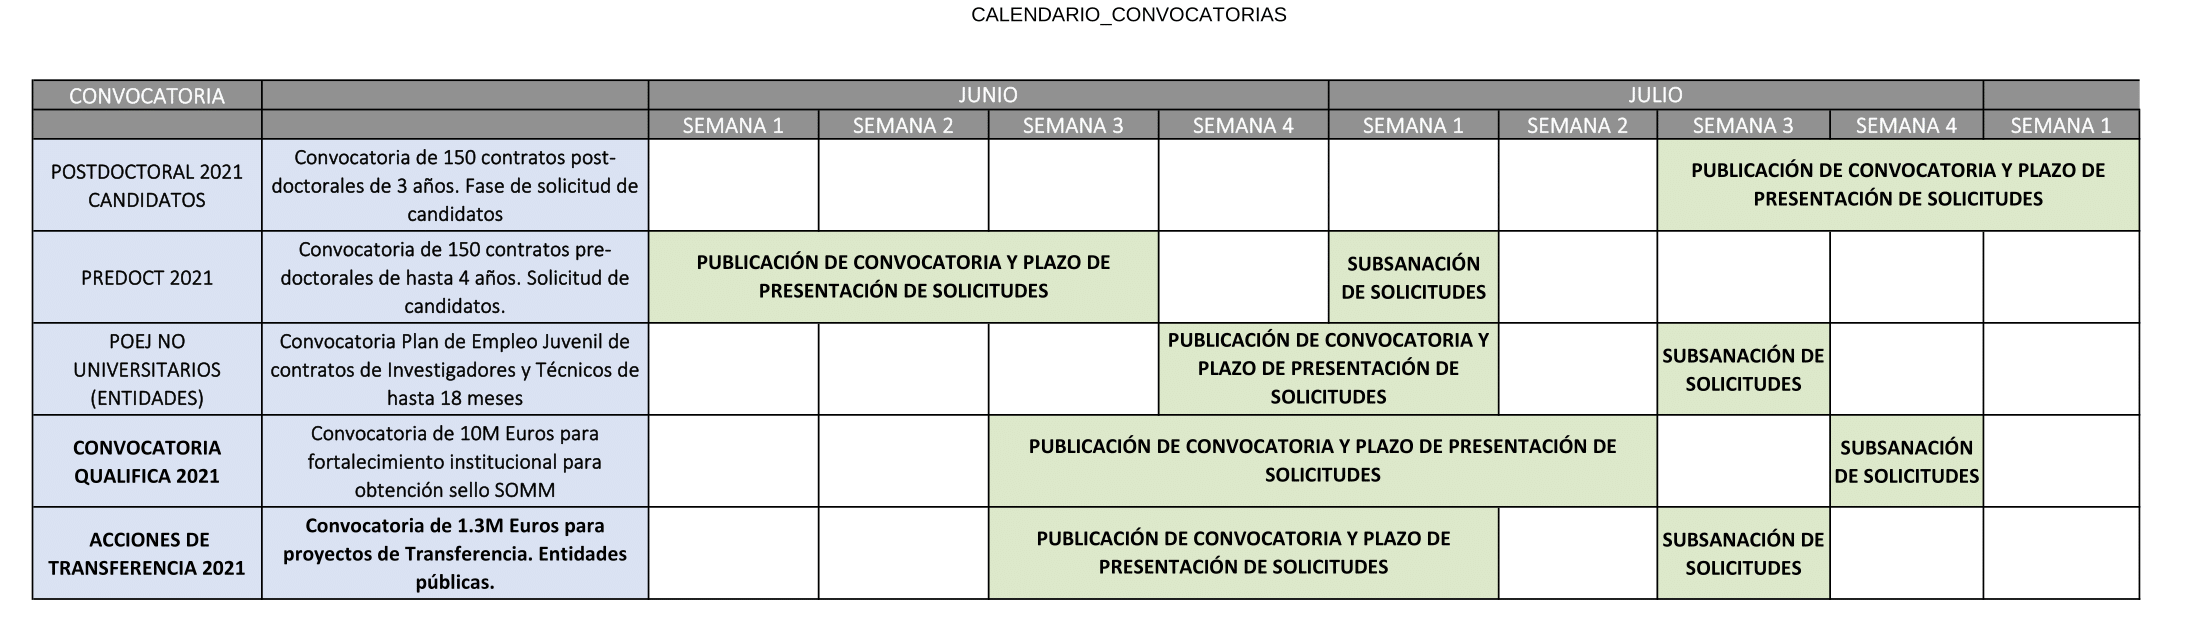 Convocatorias Junta de Andalucía